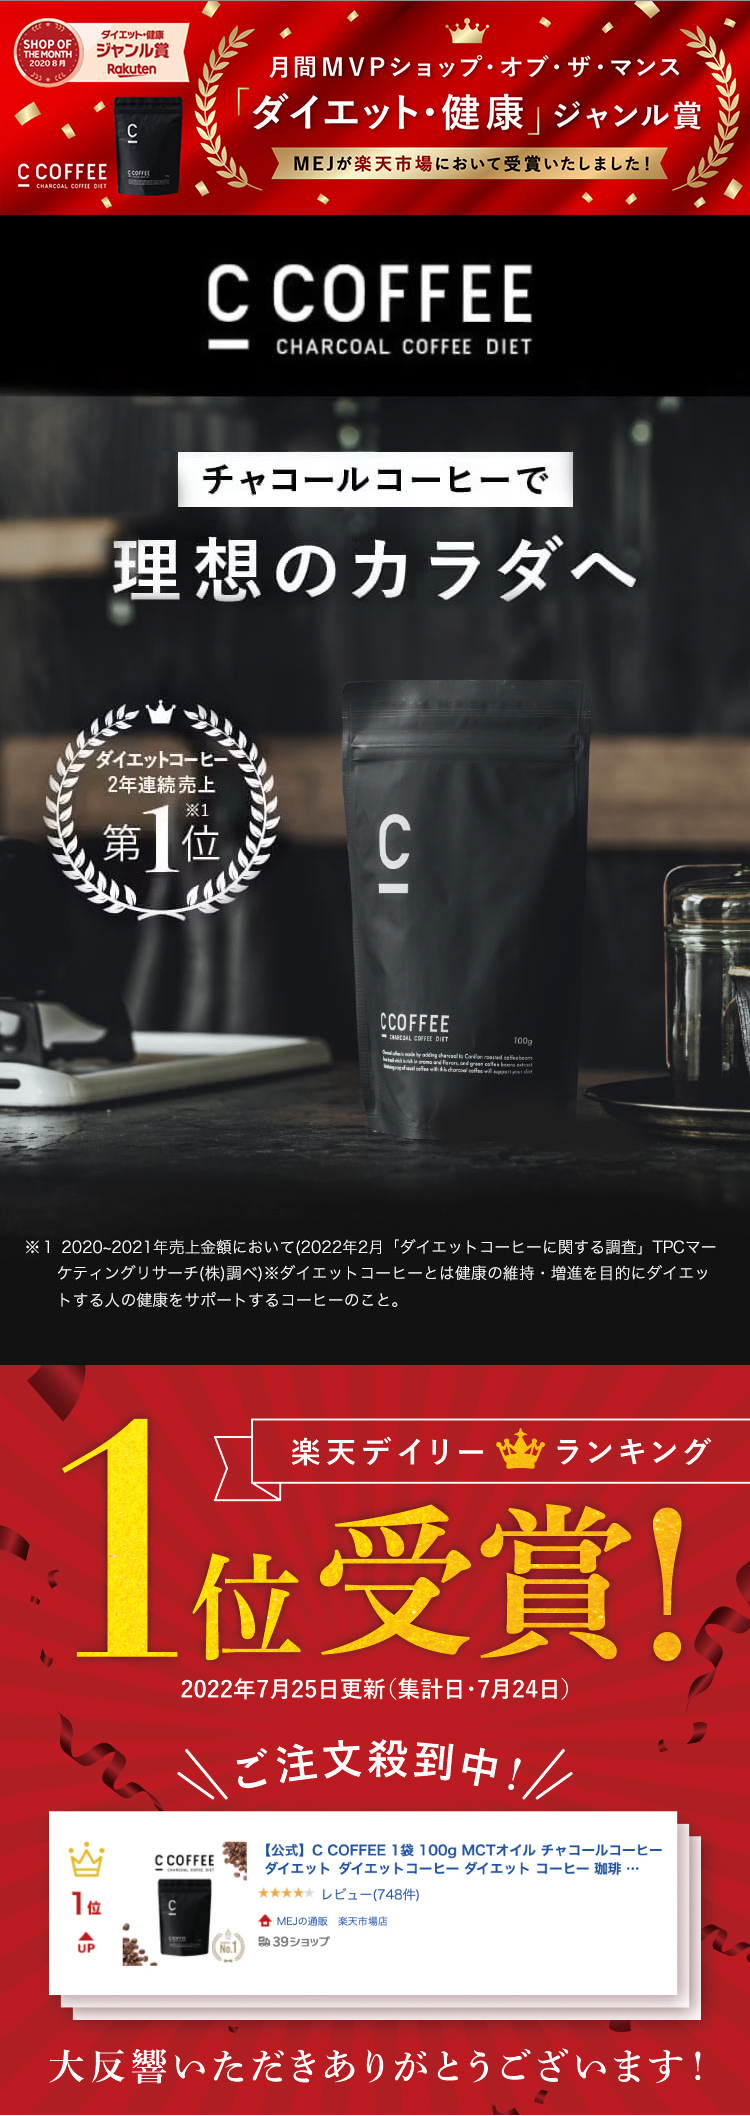 C COFFEE CHARCOAL COFFEE DIET